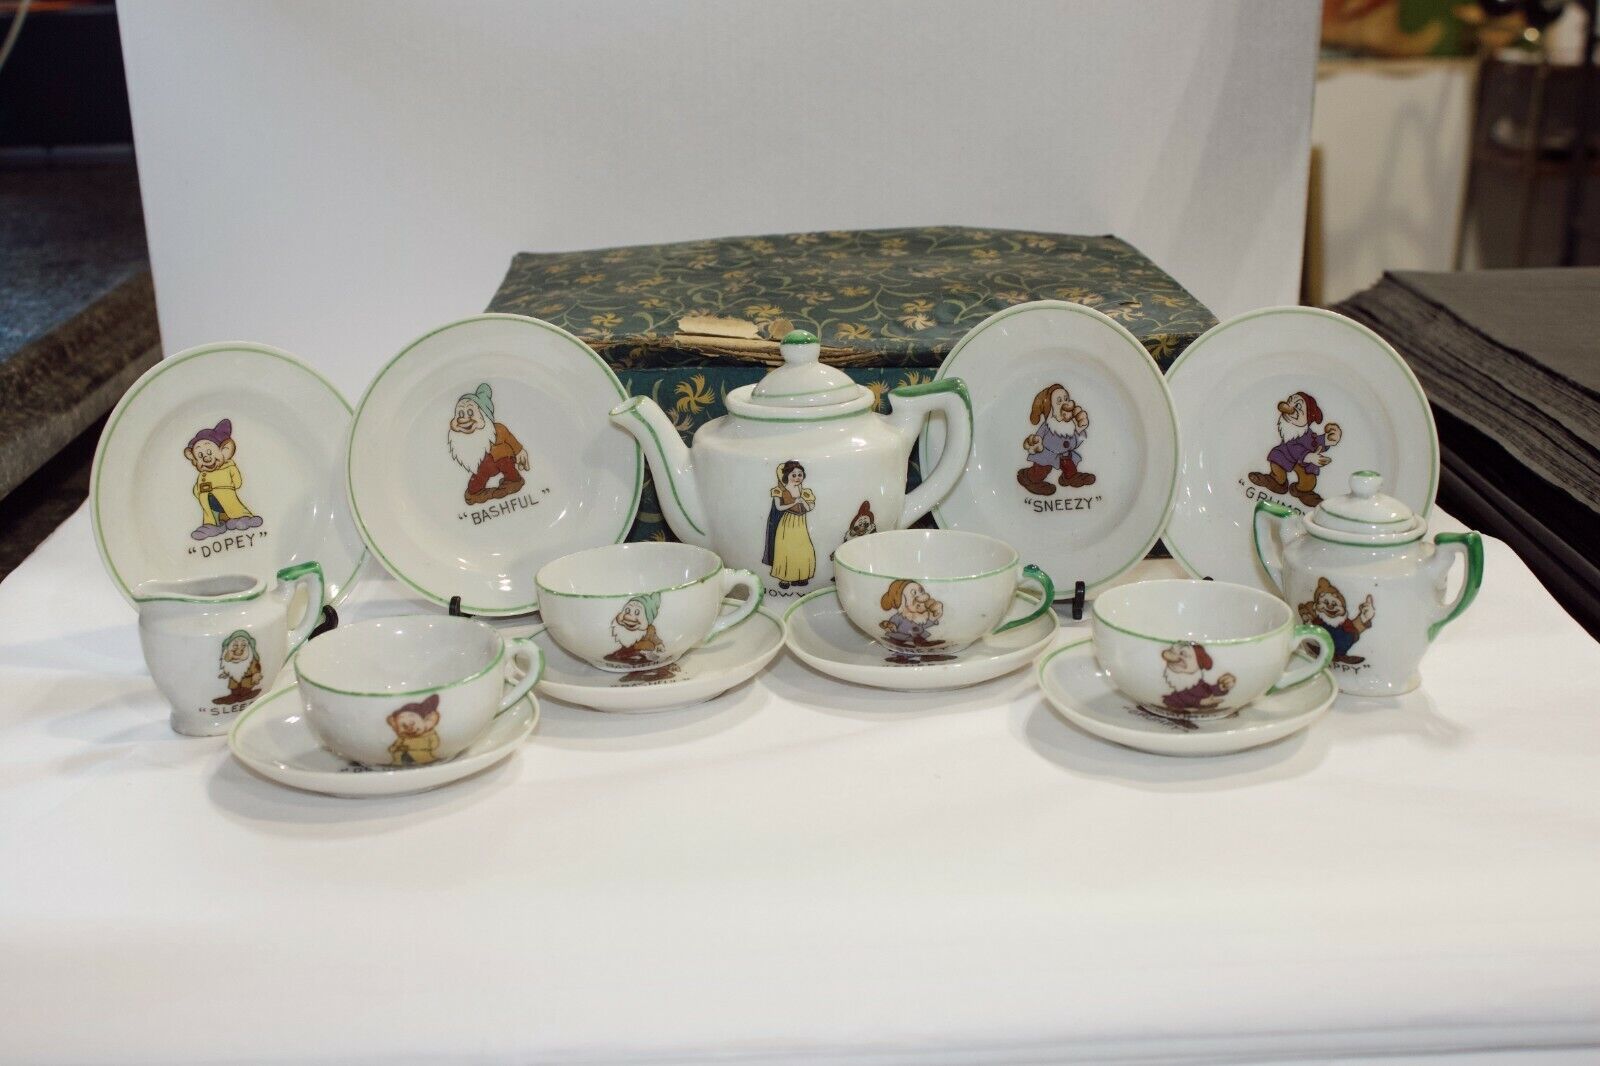 Original 1937 Walt Disney Snow White Porcelain Tea Set